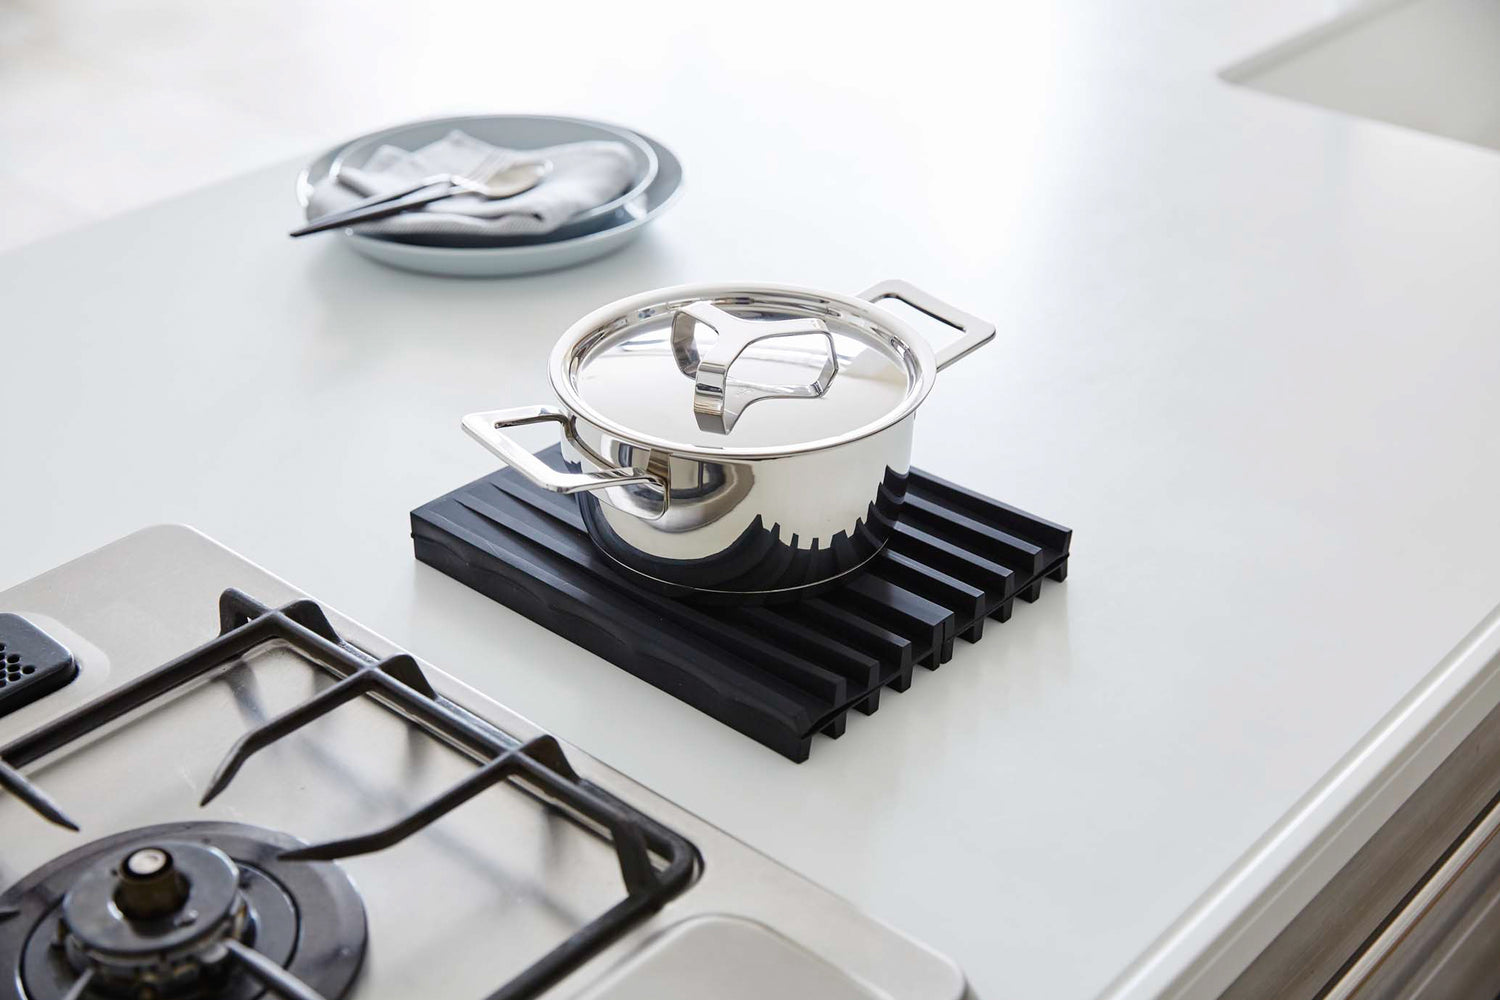 View 9 - Black Folding Dish Drainer Mat holding pot on kitchen countertop by Yamazaki Home.